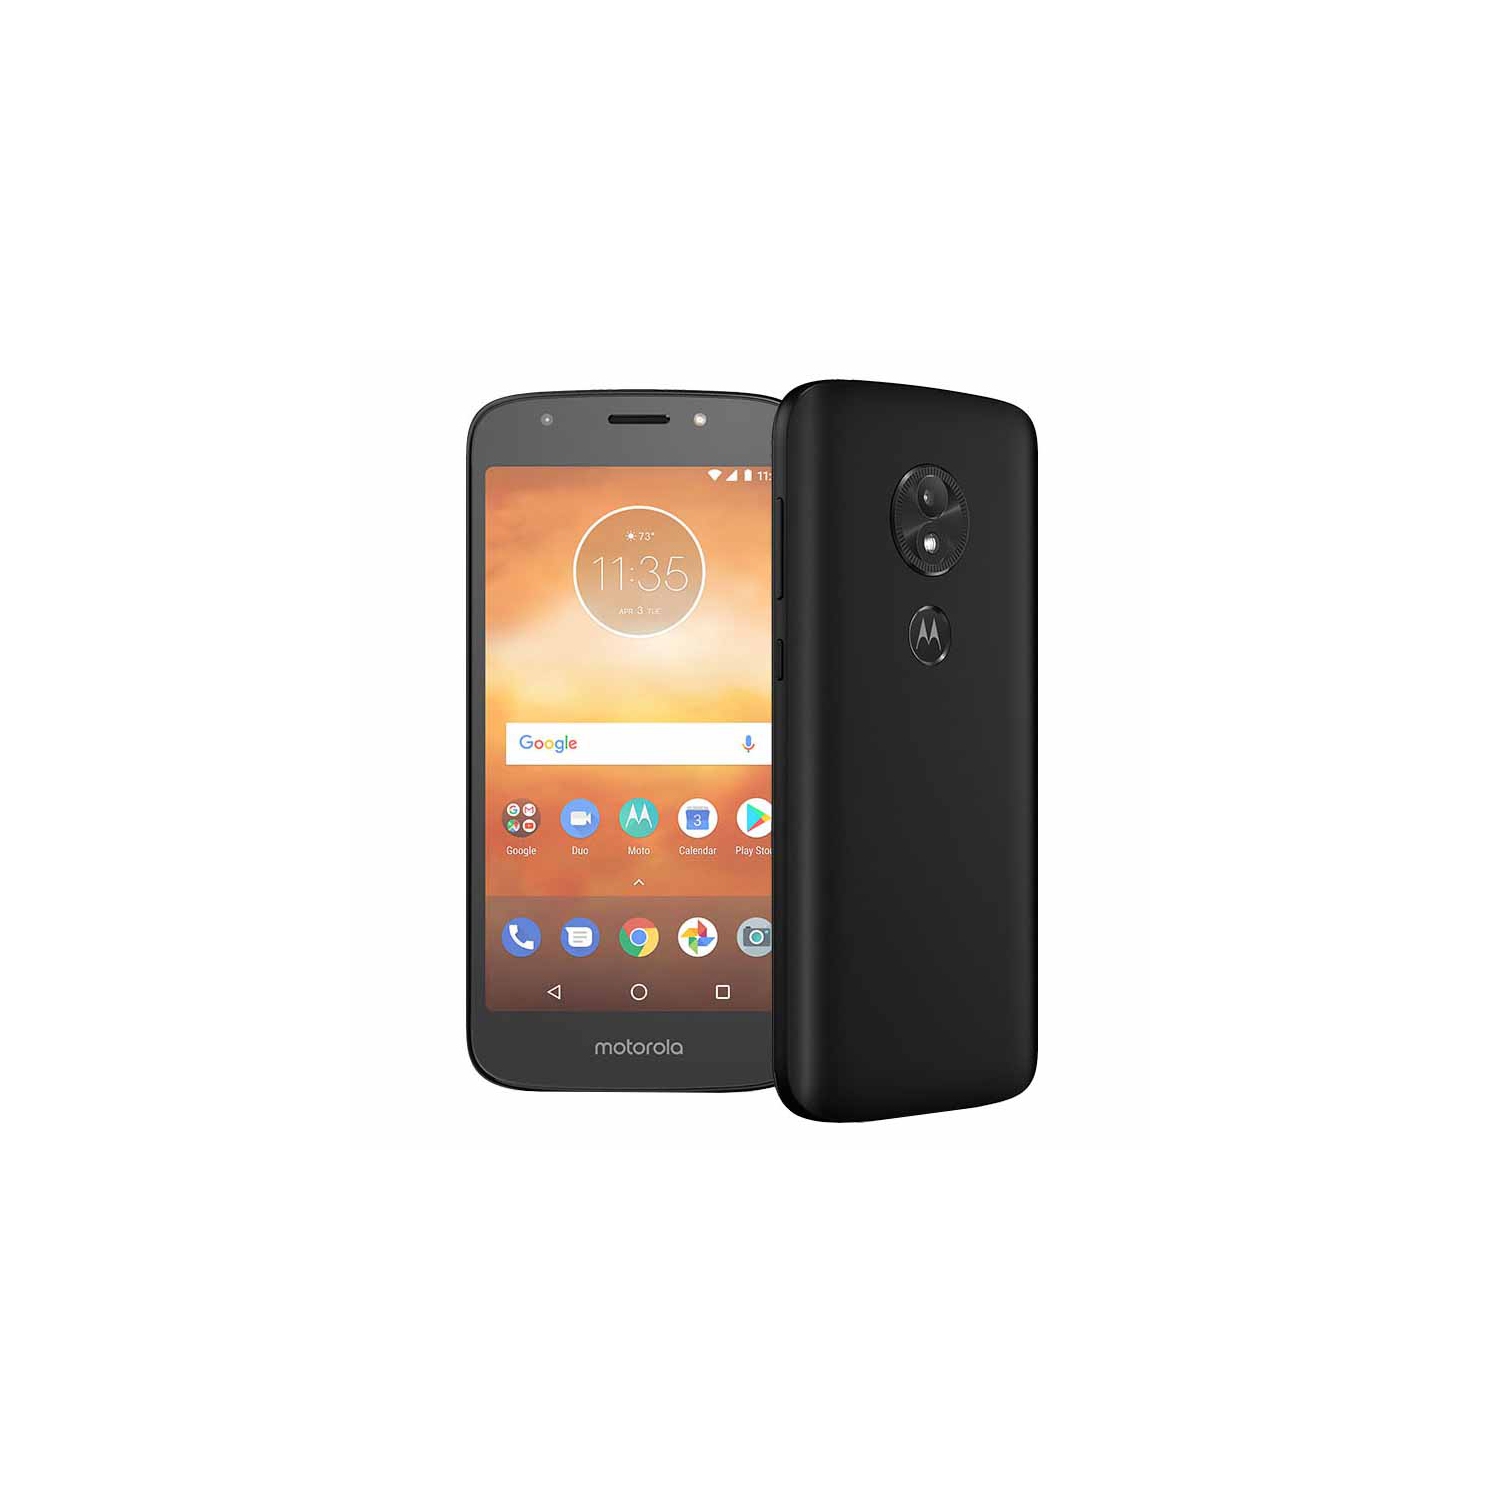 Refurbished (Excellent) - Motorola Moto E5 Play 16GB Black Unlocked XT1921 Smartphone (Certified Refurbished)